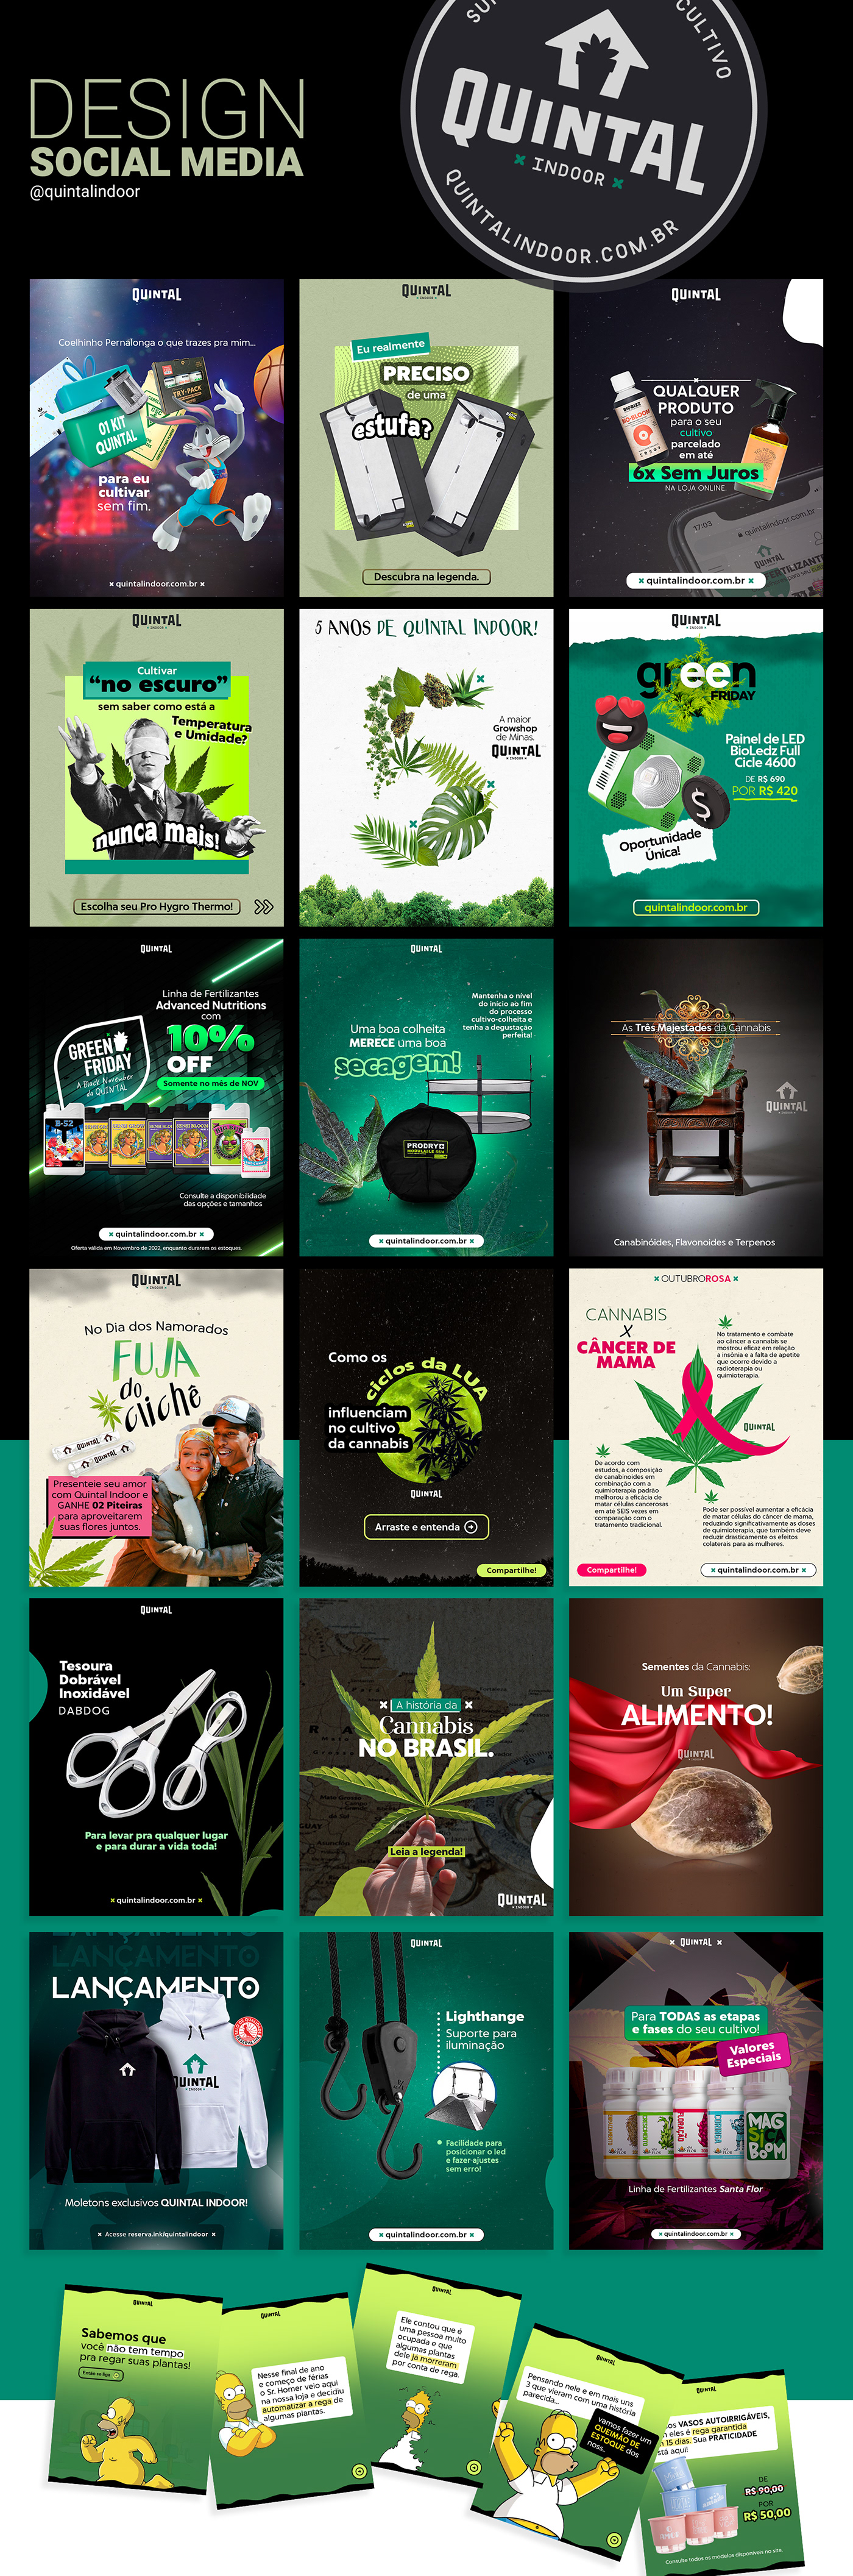 cannabis maconha Fertilizantes Uberlândia identidade visual Social media post design gráfico Cultivoindoor